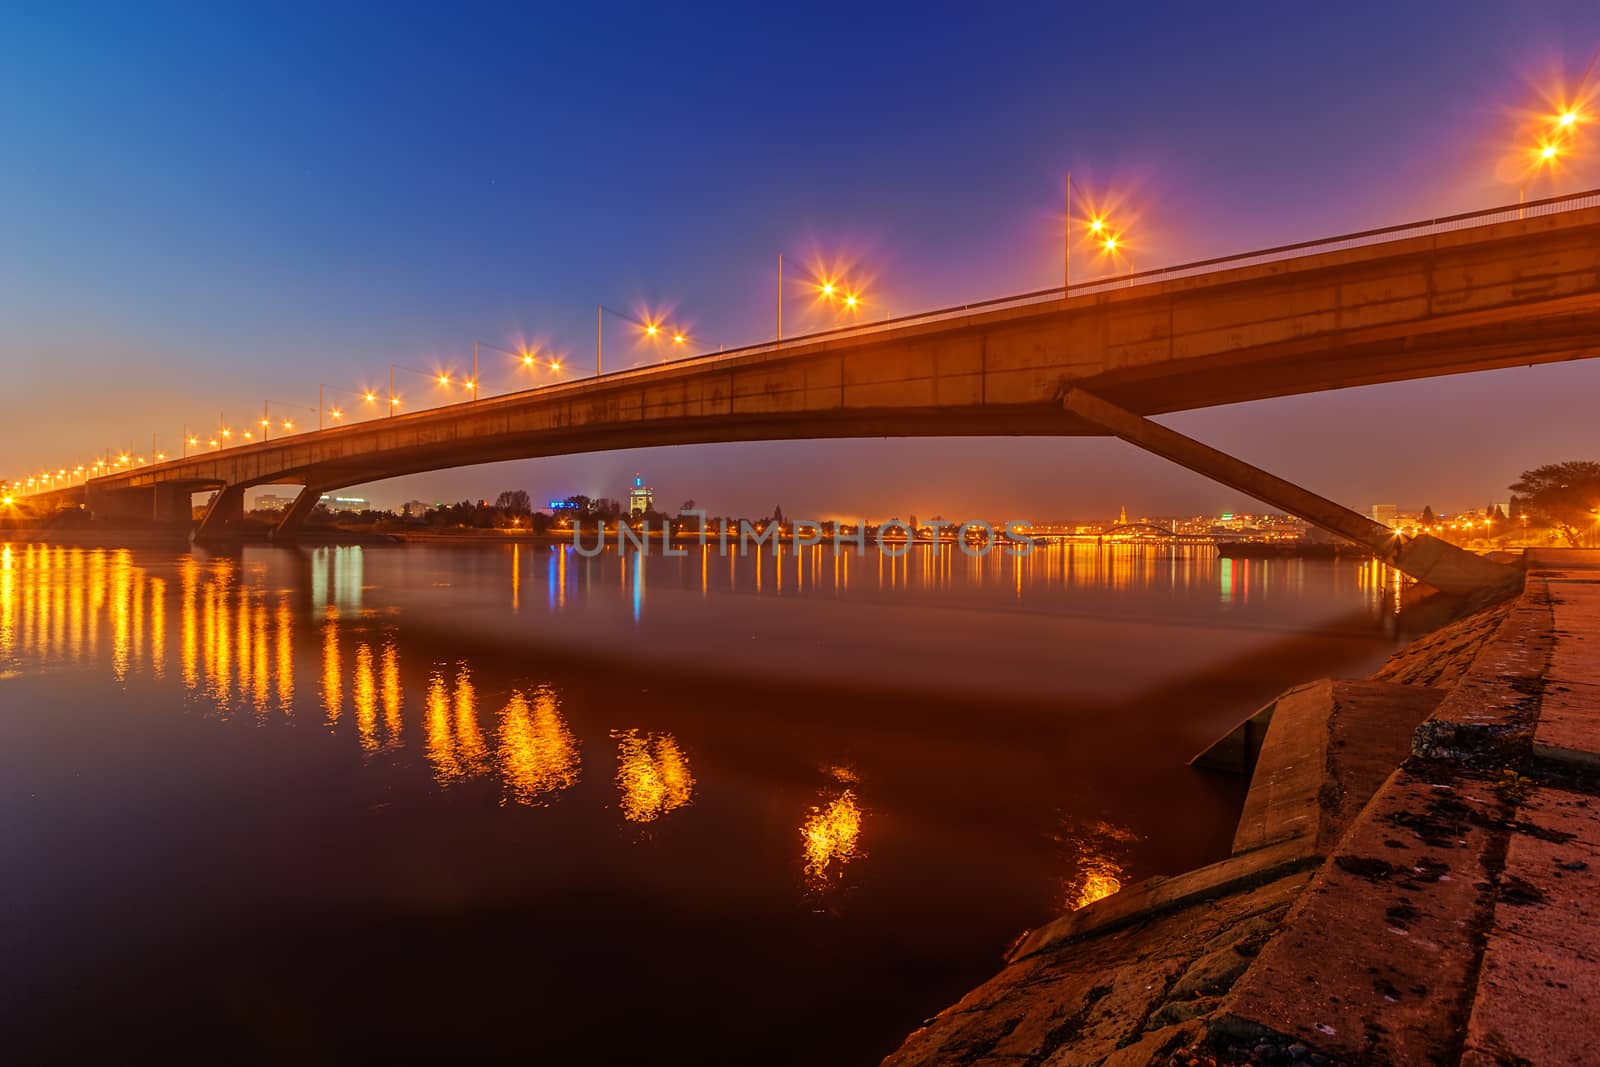 Bridge across river at night by vladimirnenezic